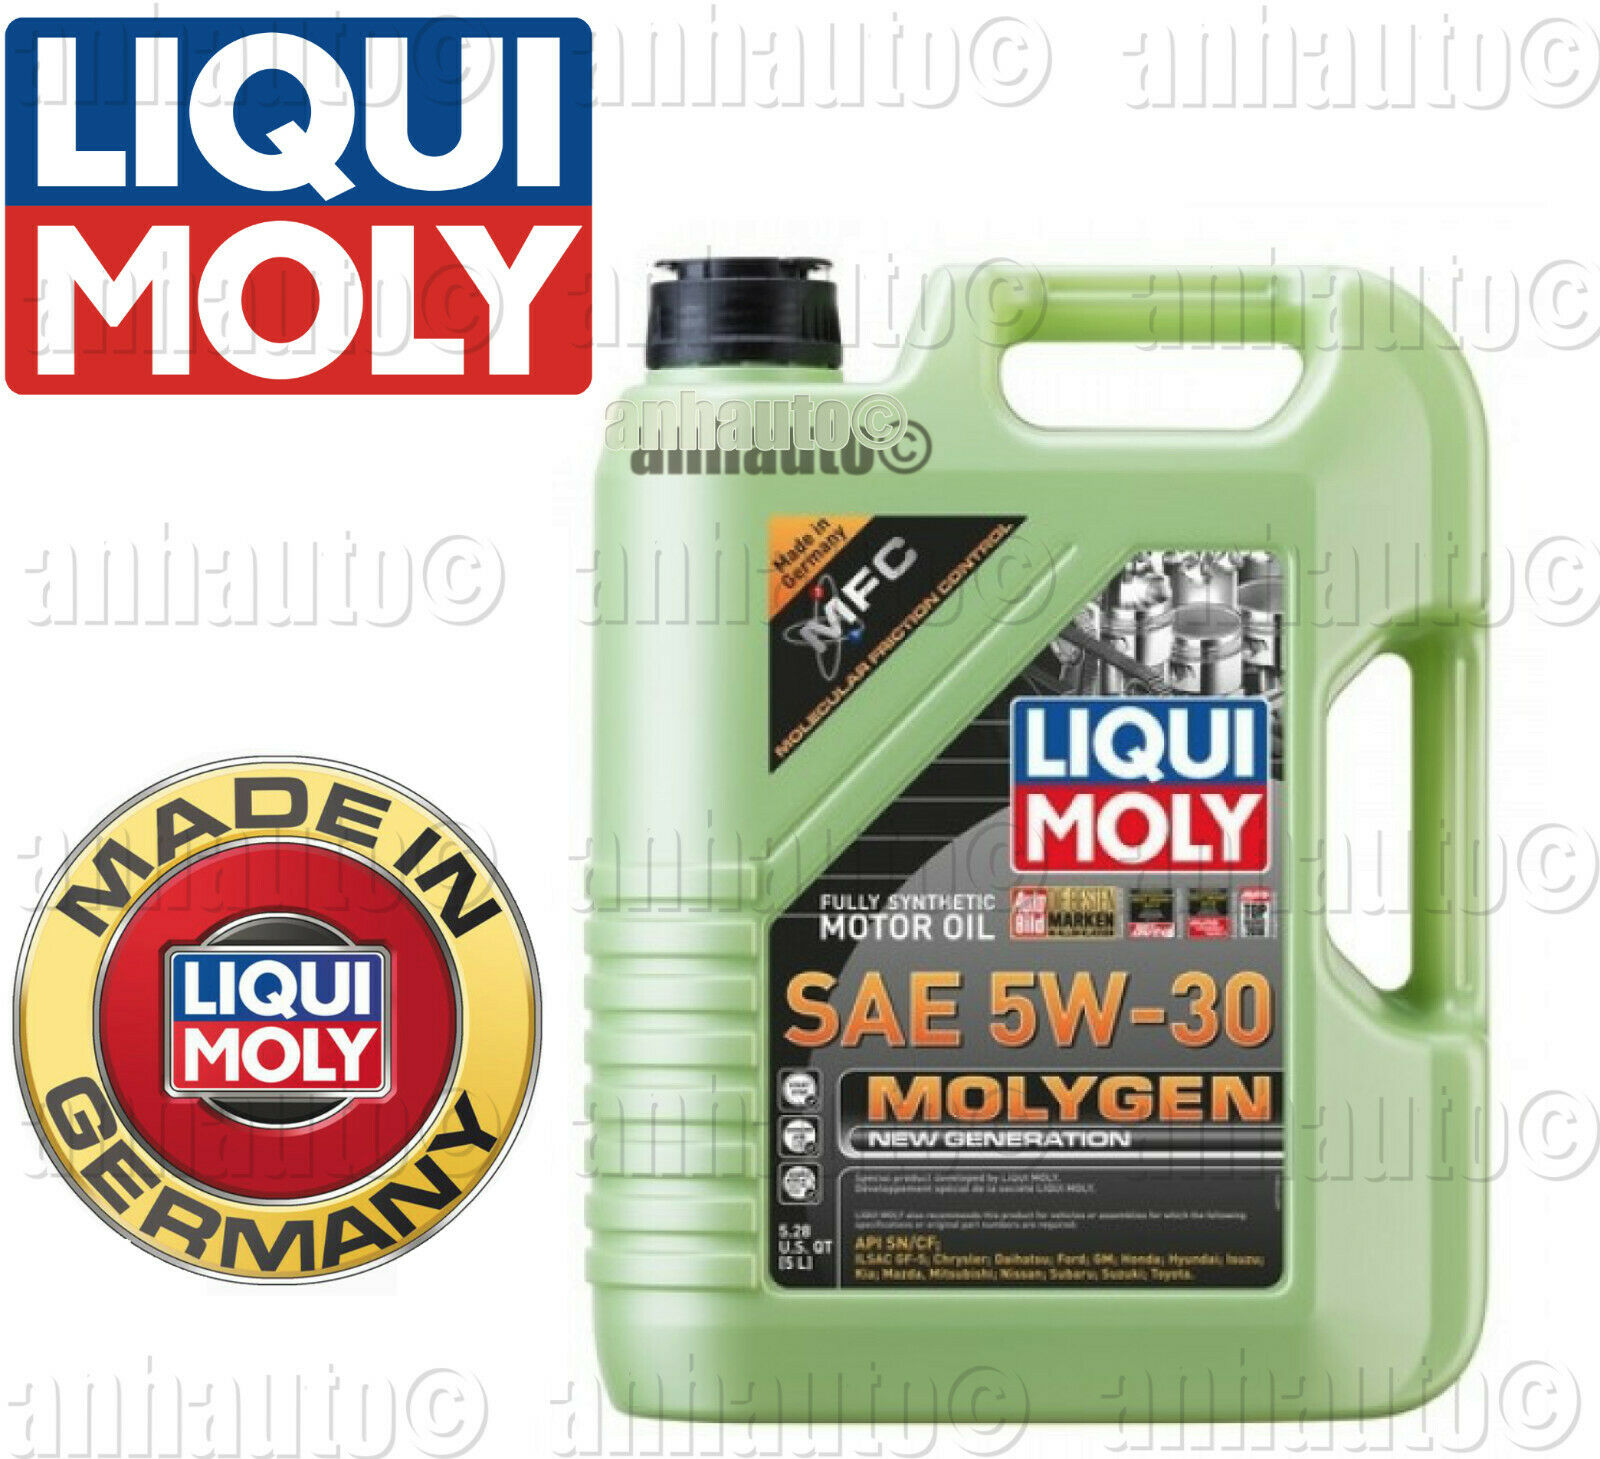 Liqui Moly  20228  Molygen New Generation Sae 5w-30   Motor Oil 5-liter